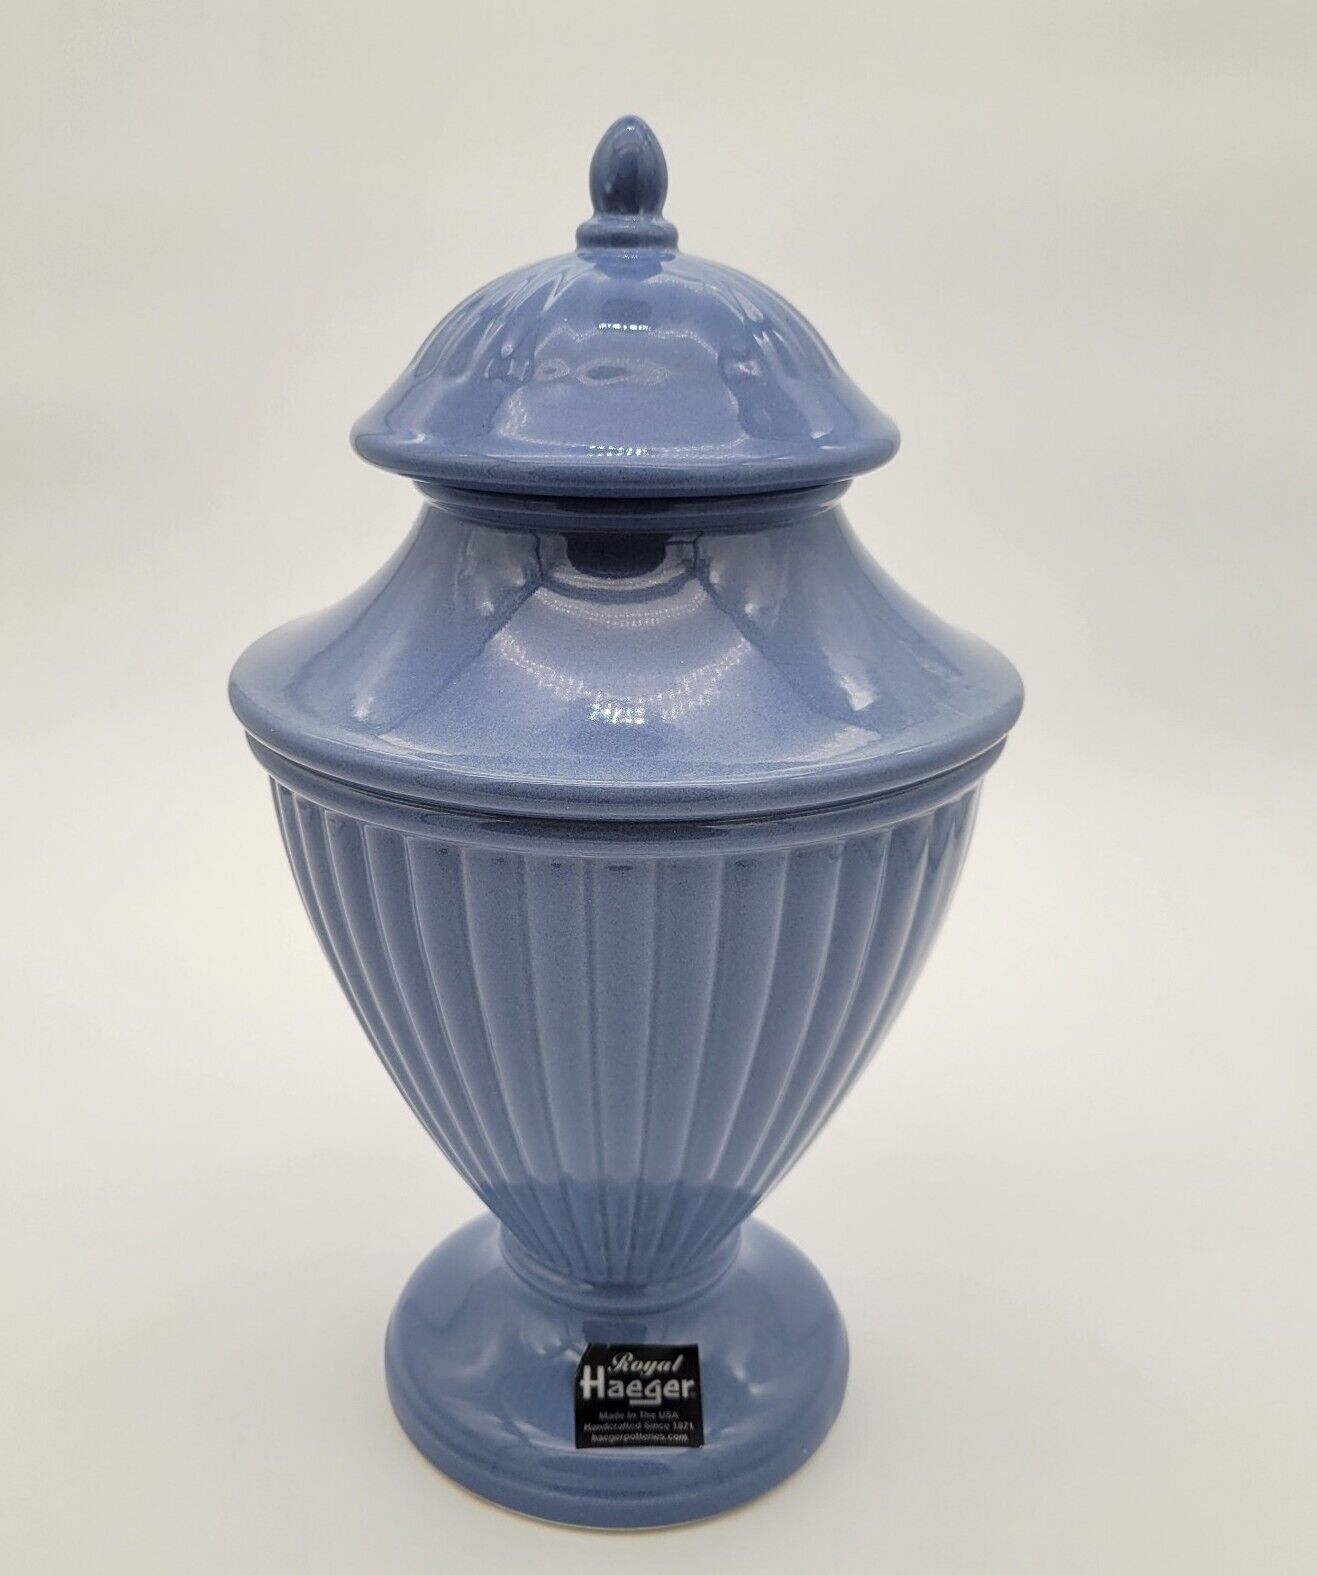 HAEGER pottery blue Vase big Urn Planter Vase with lid rare Signed Shipping